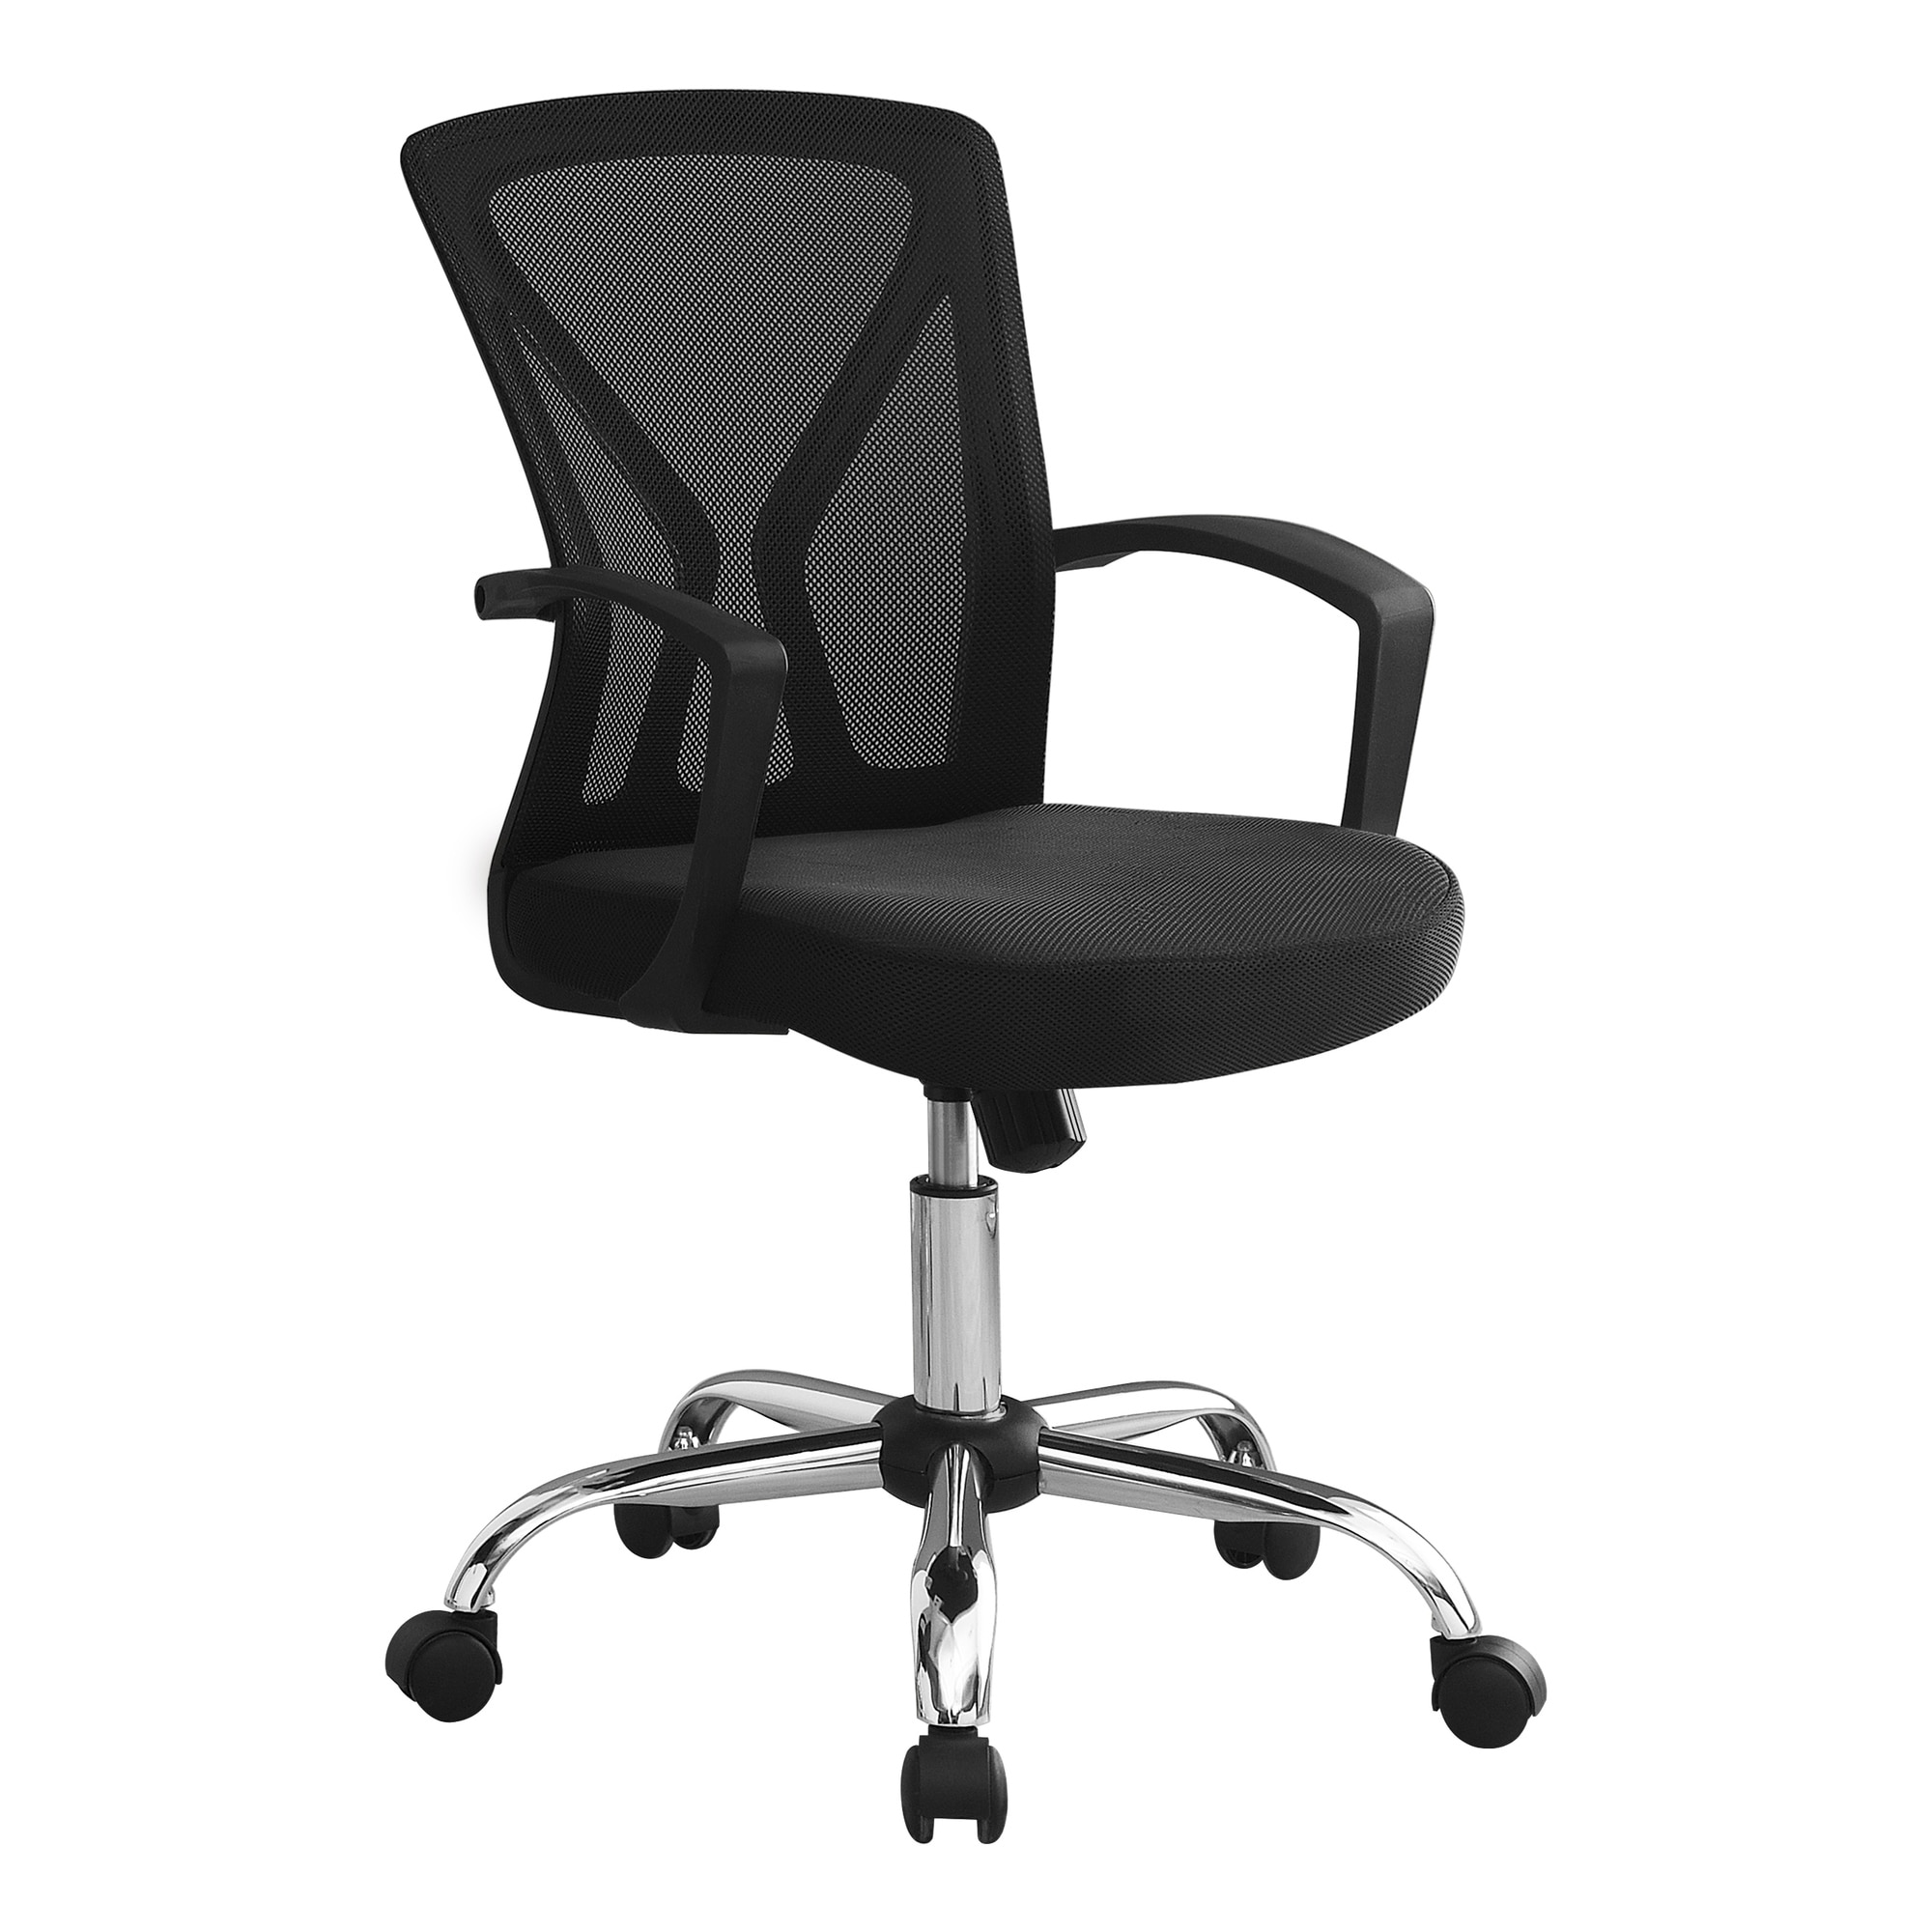 Office Chair, Adjustable Height, Swivel, Ergonomic, Armrests, Computer Desk, Work, Metal, Fabric, Chrome, Contemporary